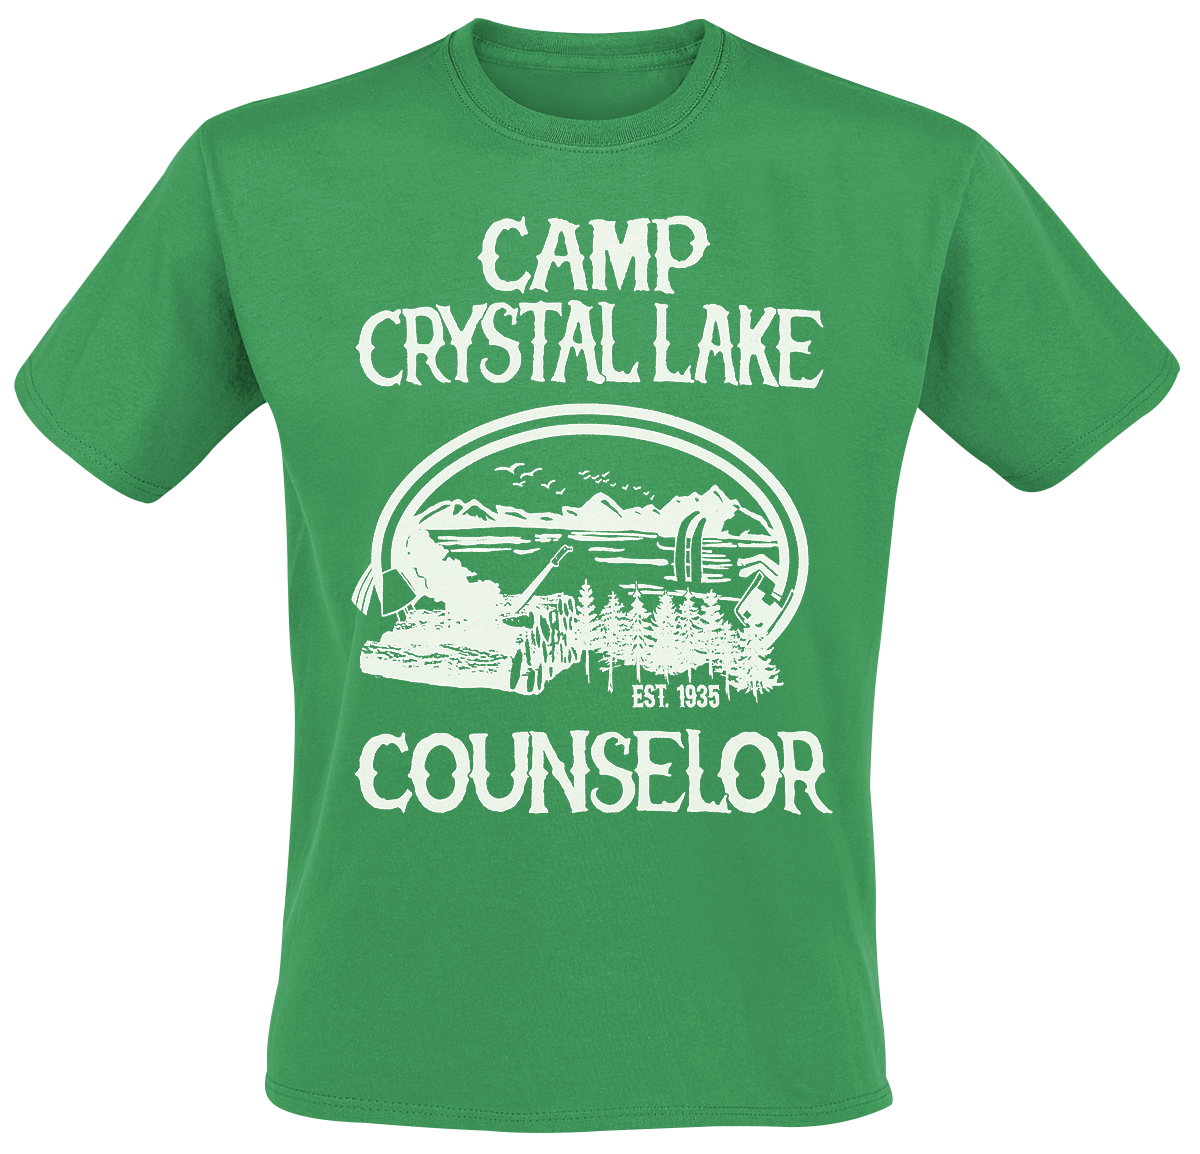 Friday the 13th - Camp Crystal Lake Counselor - T-Shirt - green image